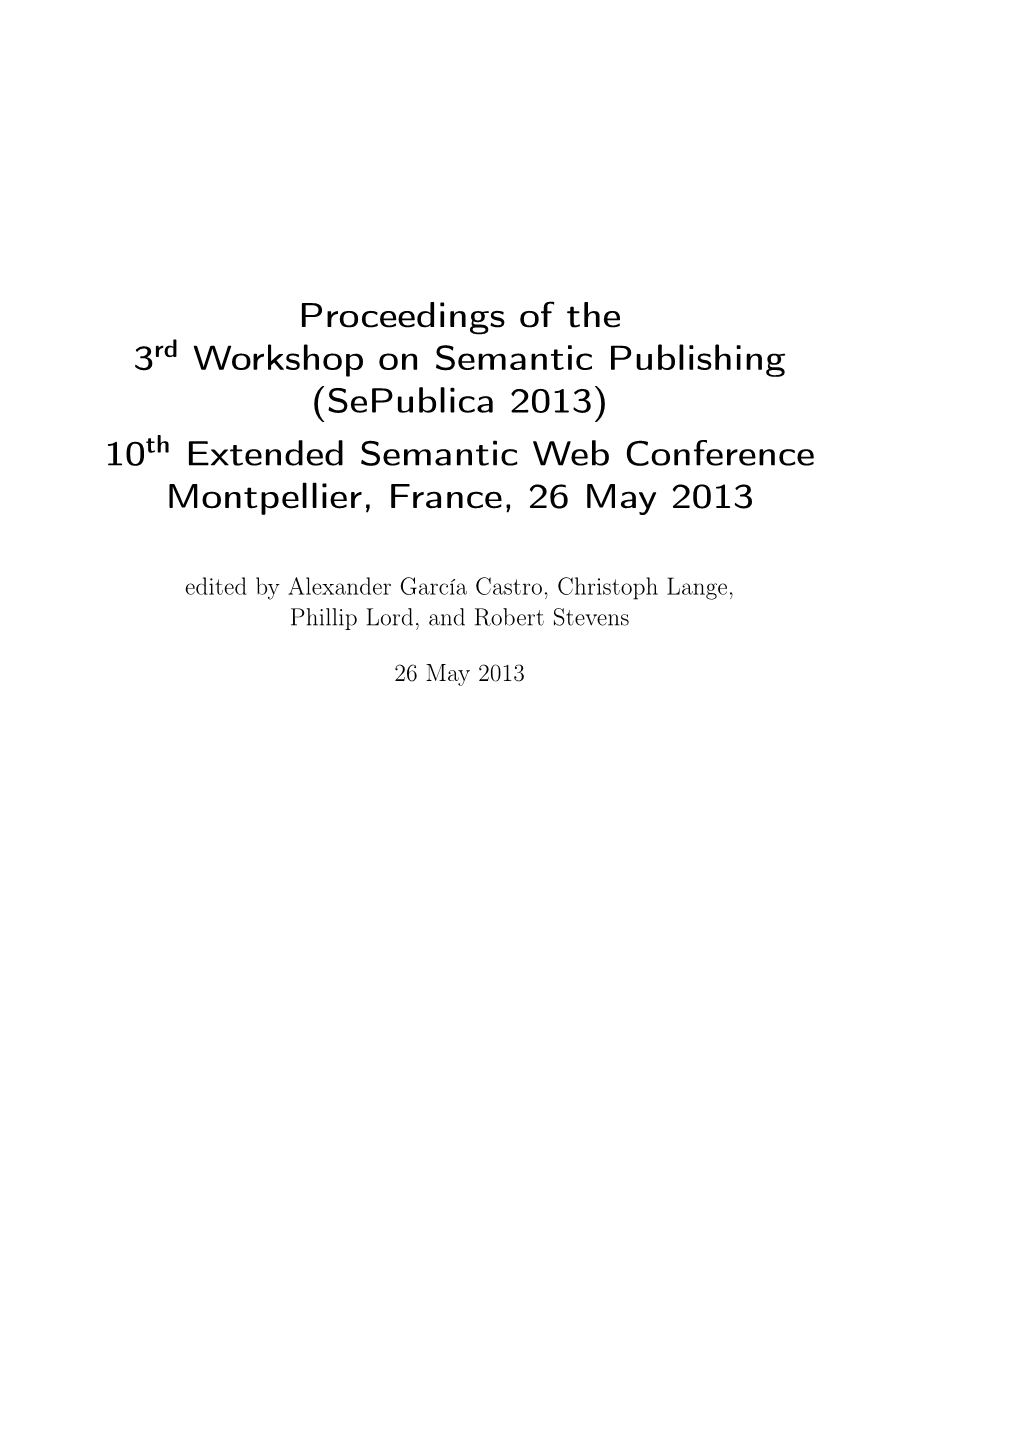 Proceedings of the 3 Workshop on Semantic Publishing (Sepublica